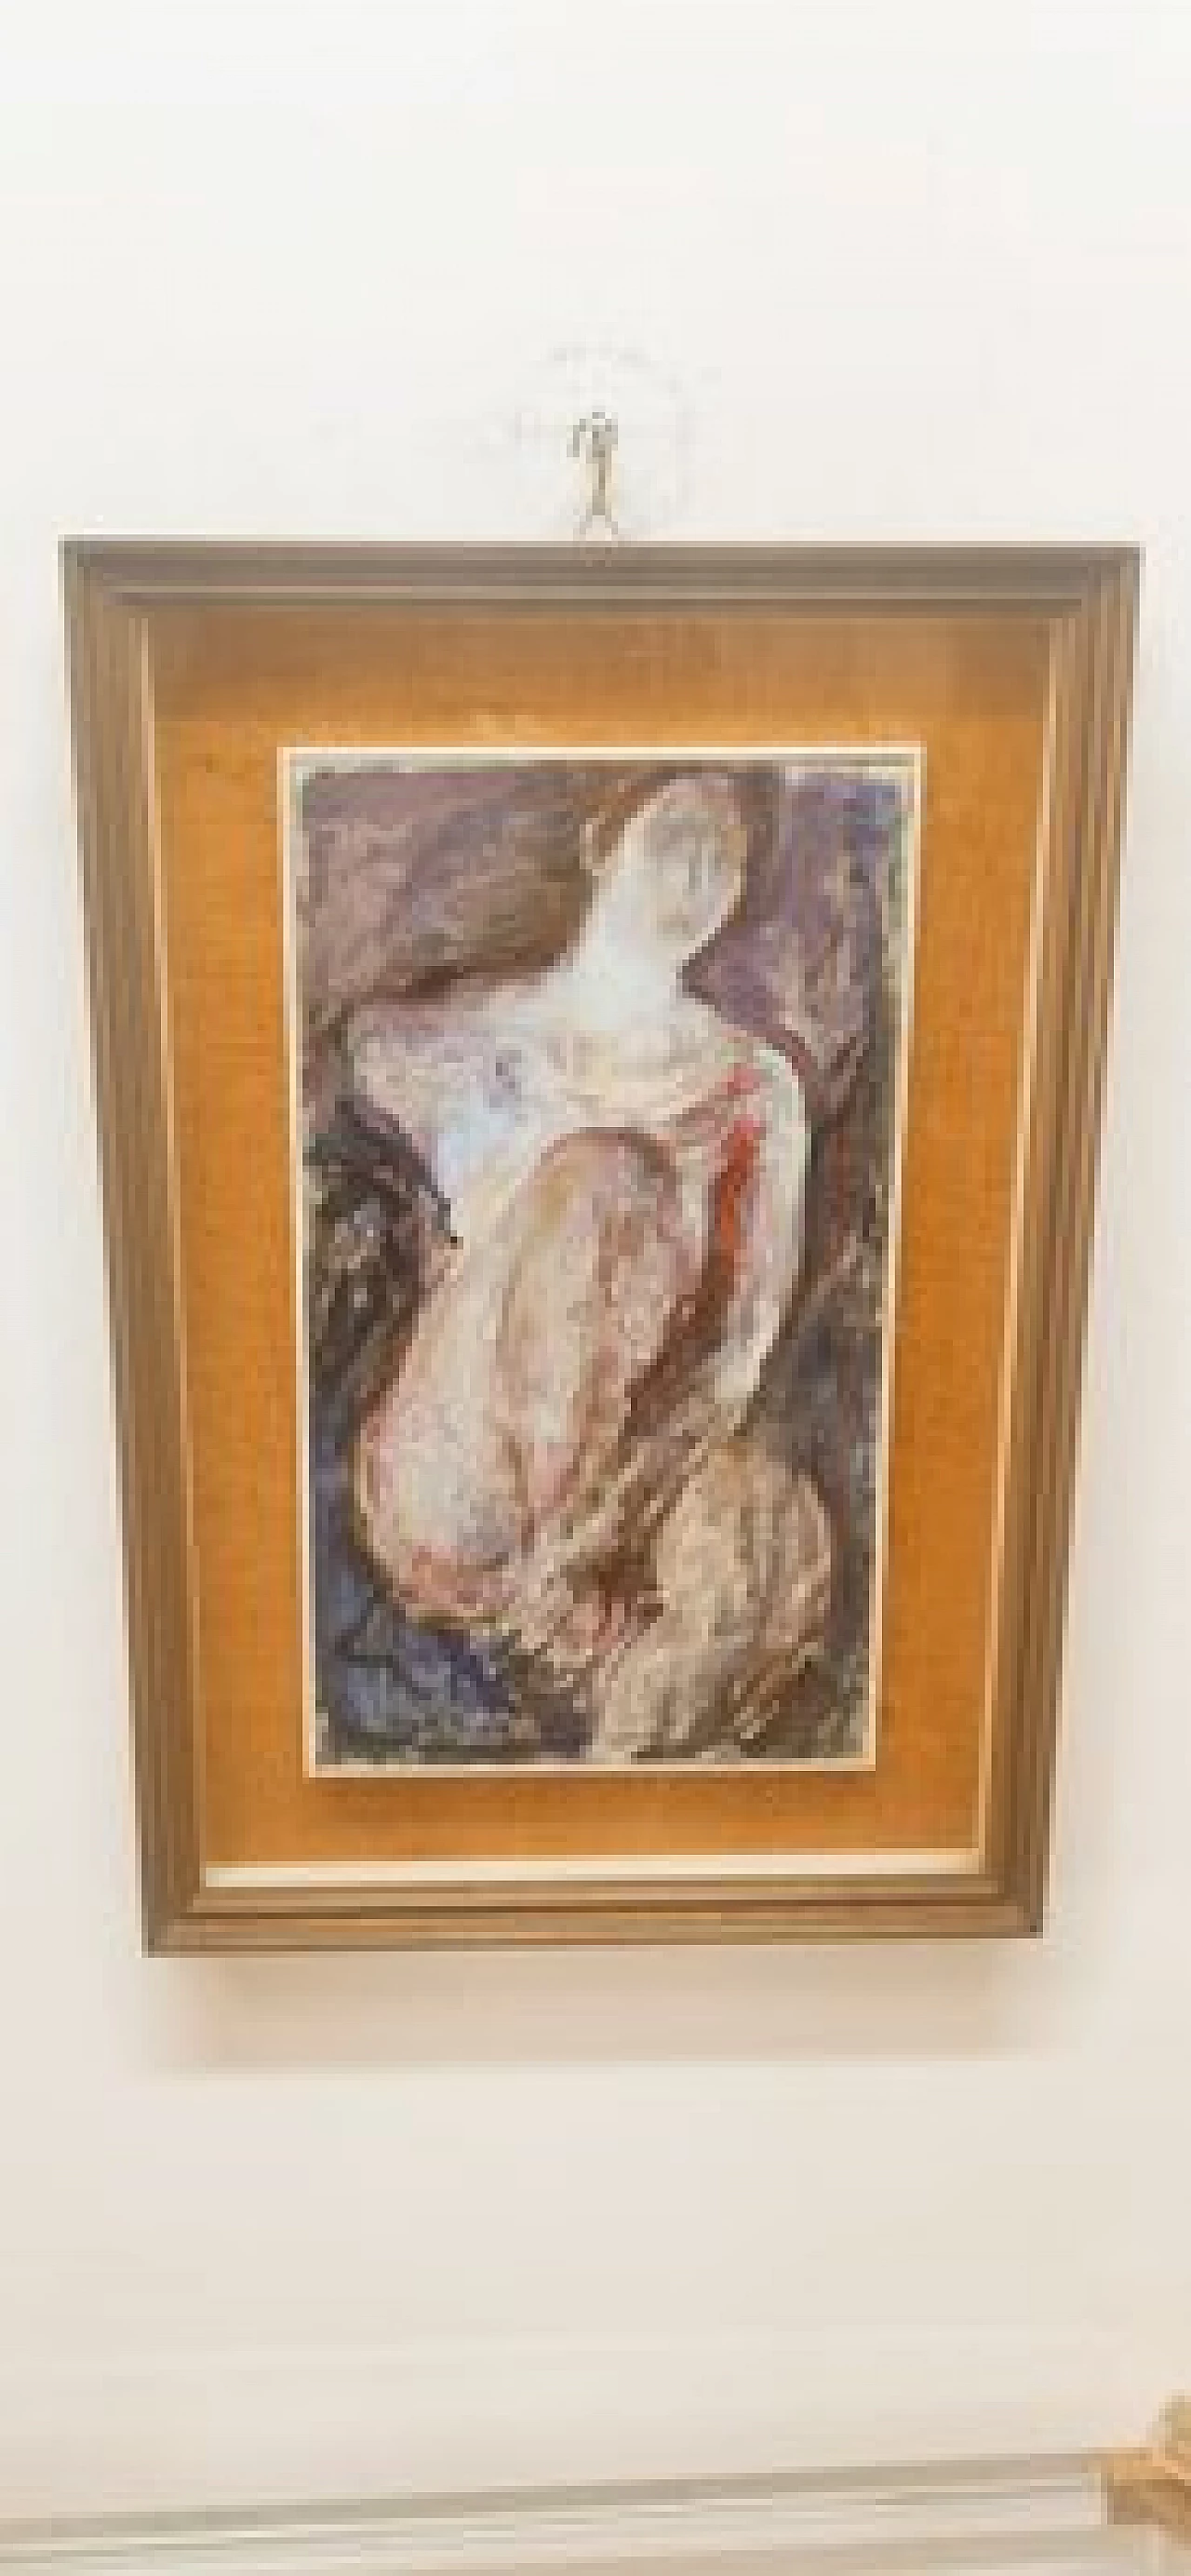 Capaldo, female nude, oil painting on canvas, 1970s 1